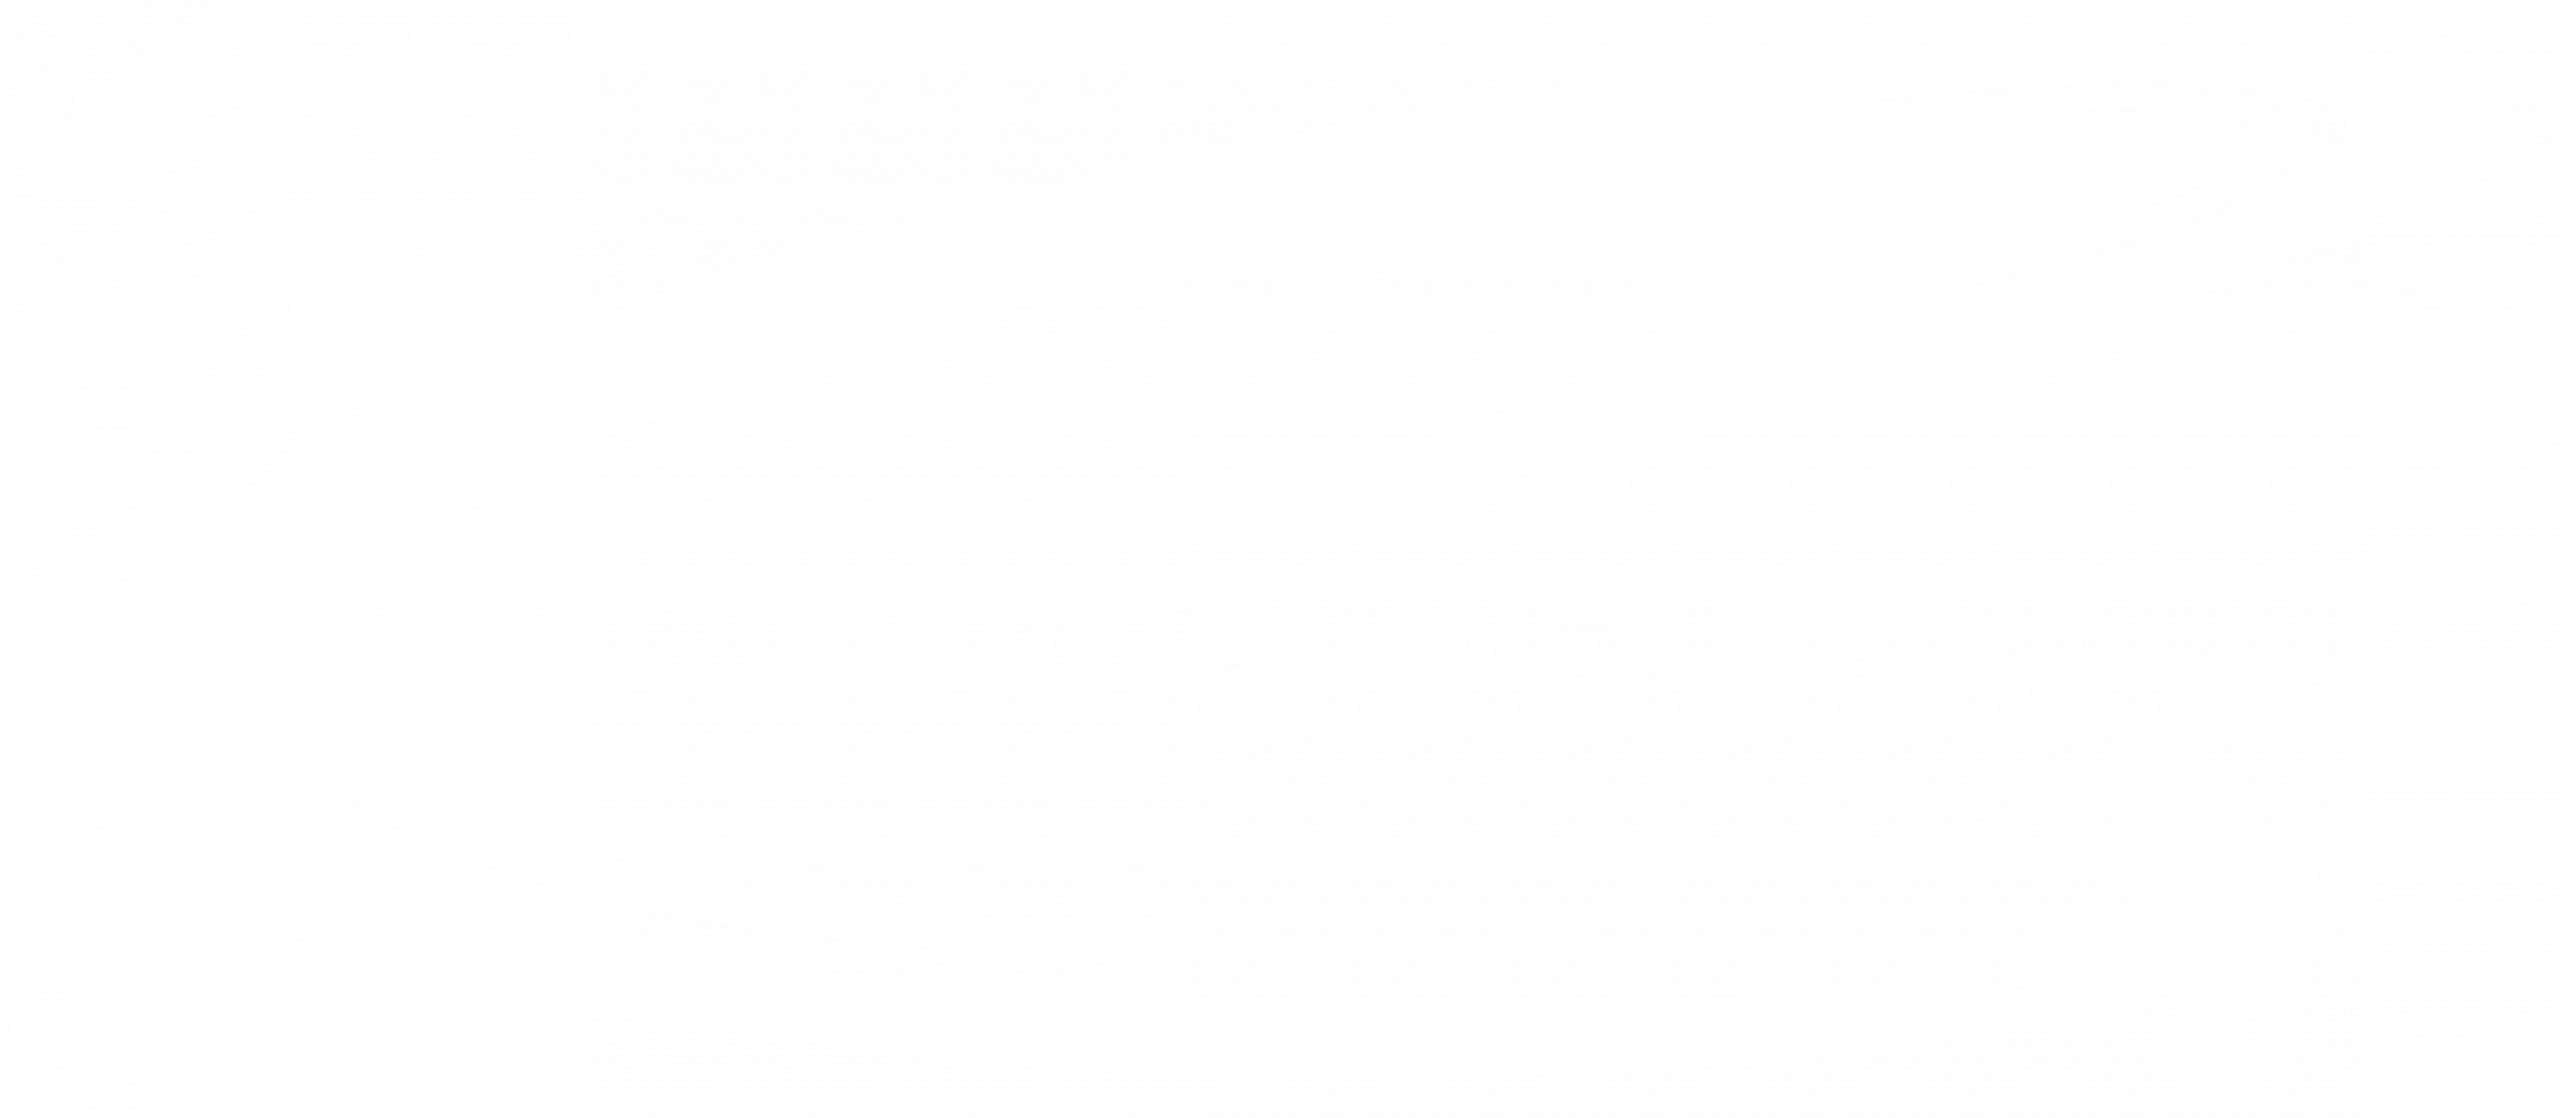 Ninth Planet Media logo in white